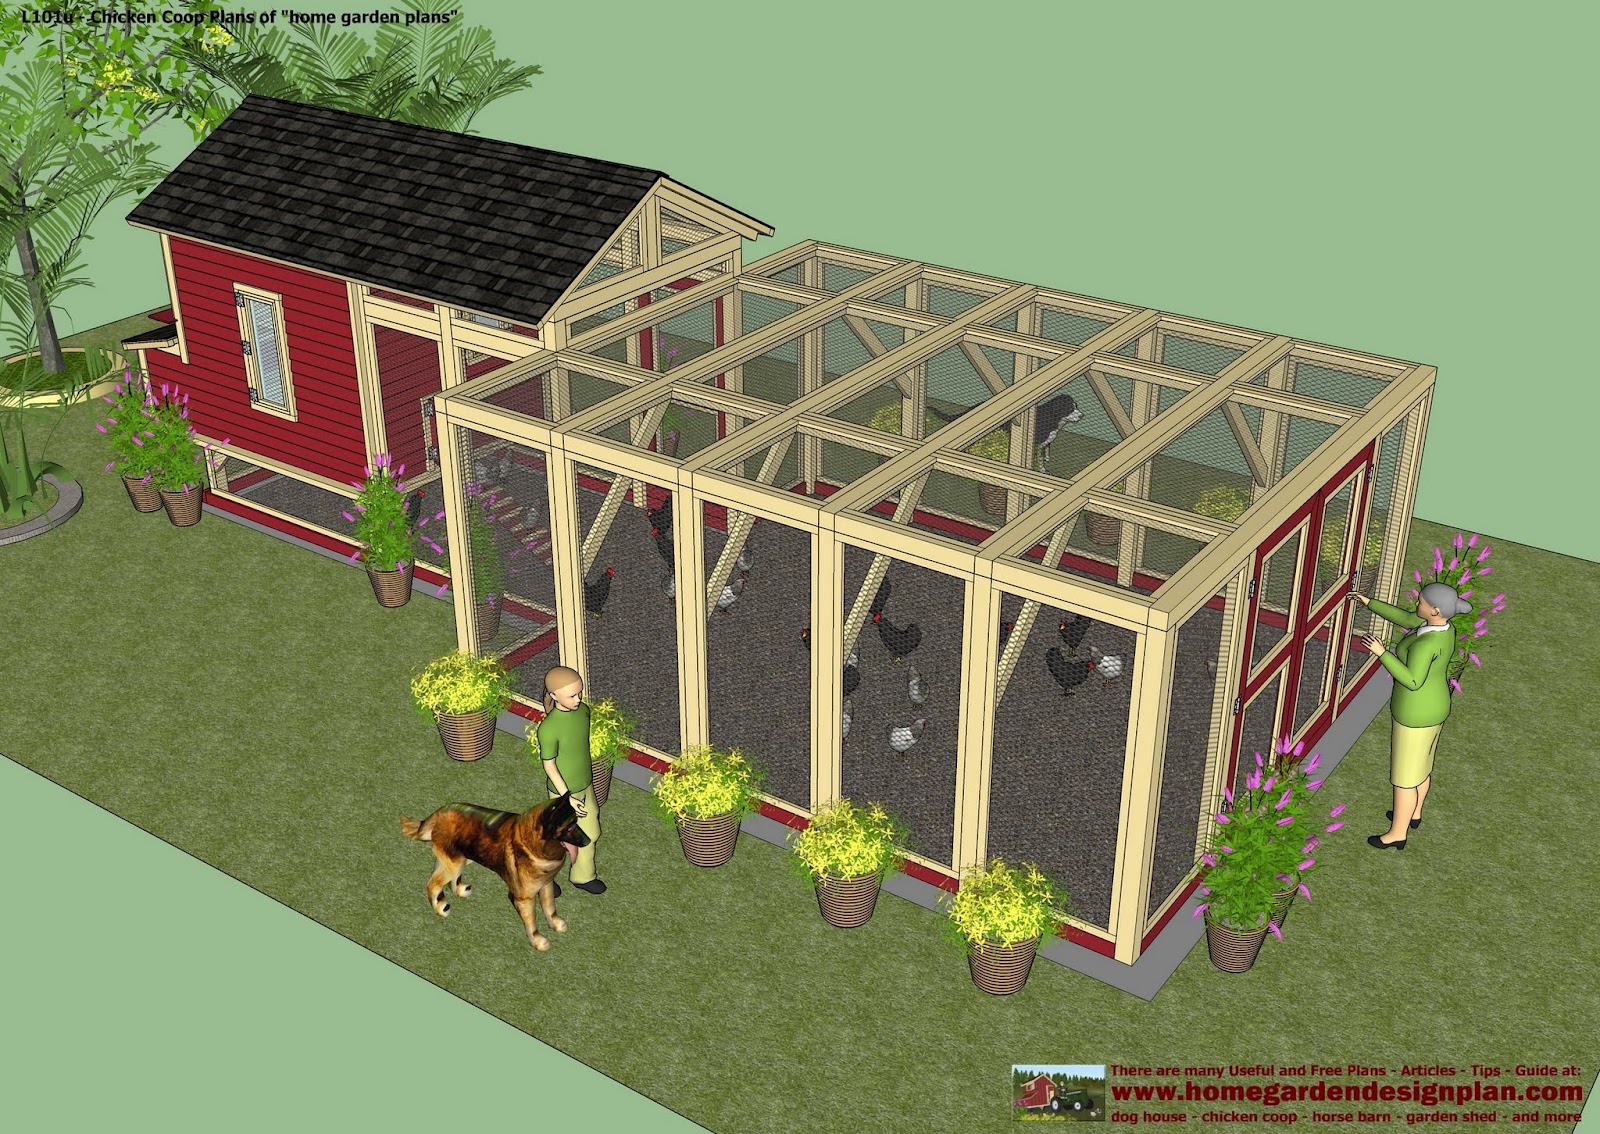 L101 - Chicken Coop Plans Construction - Chicken Coop Design - How To ...